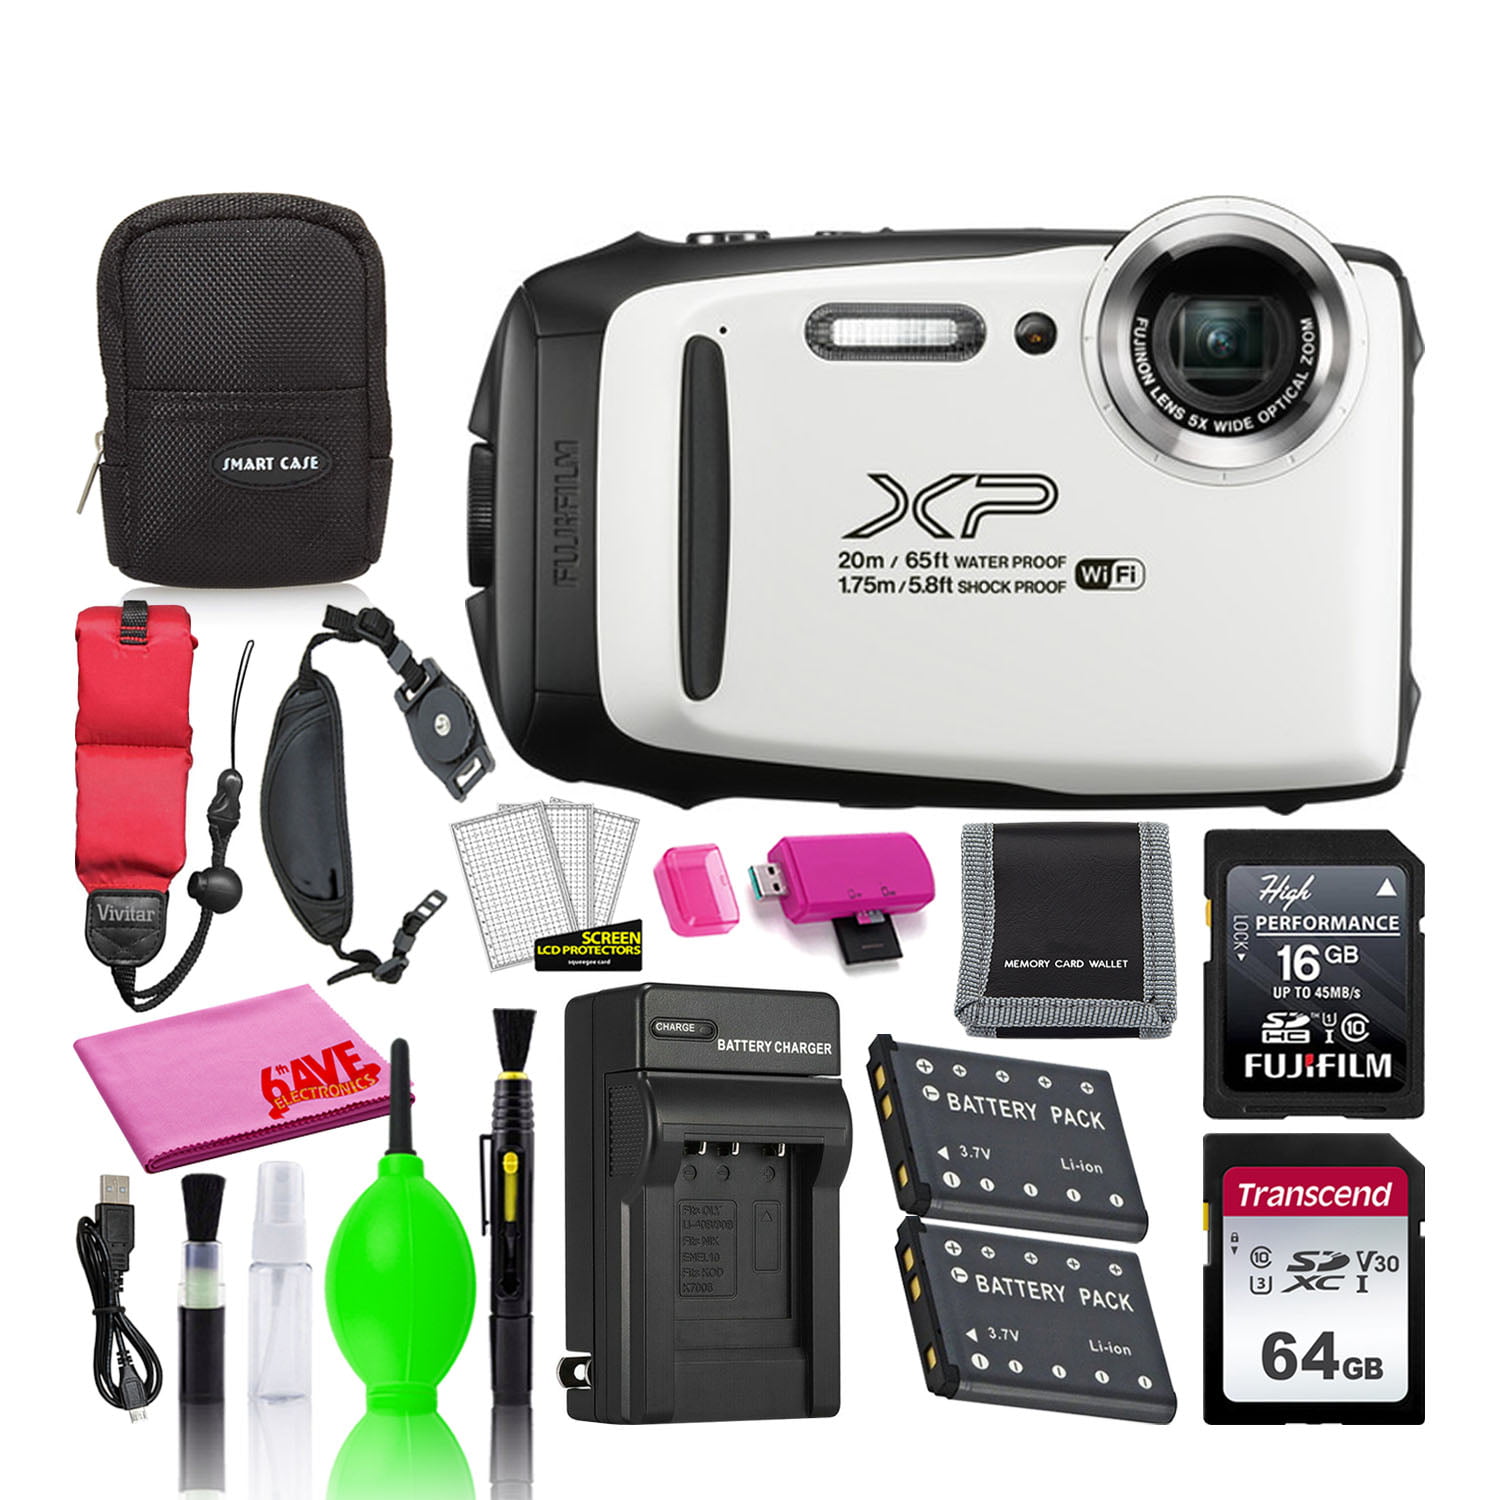 Fujifilm FinePix XP130 Waterproof Digital Camera (White) with 80GB